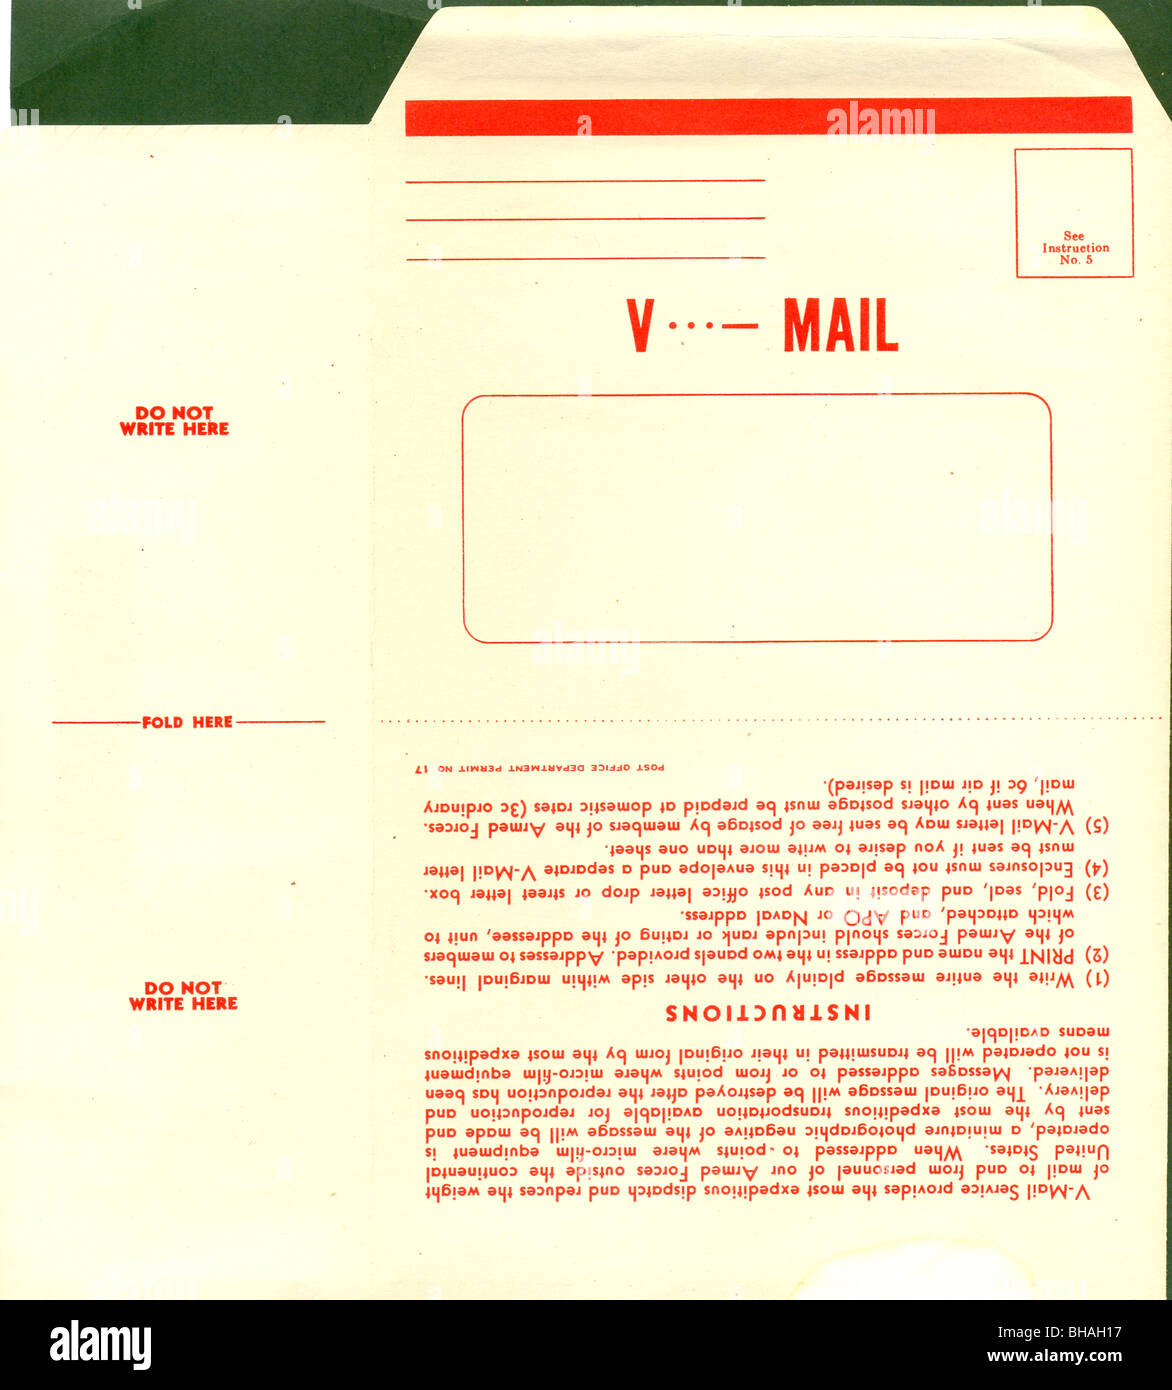 Estados Unidos V-Mail formulario para las Fuerzas Armadas para enviar correo aéreo gratis Foto de stock